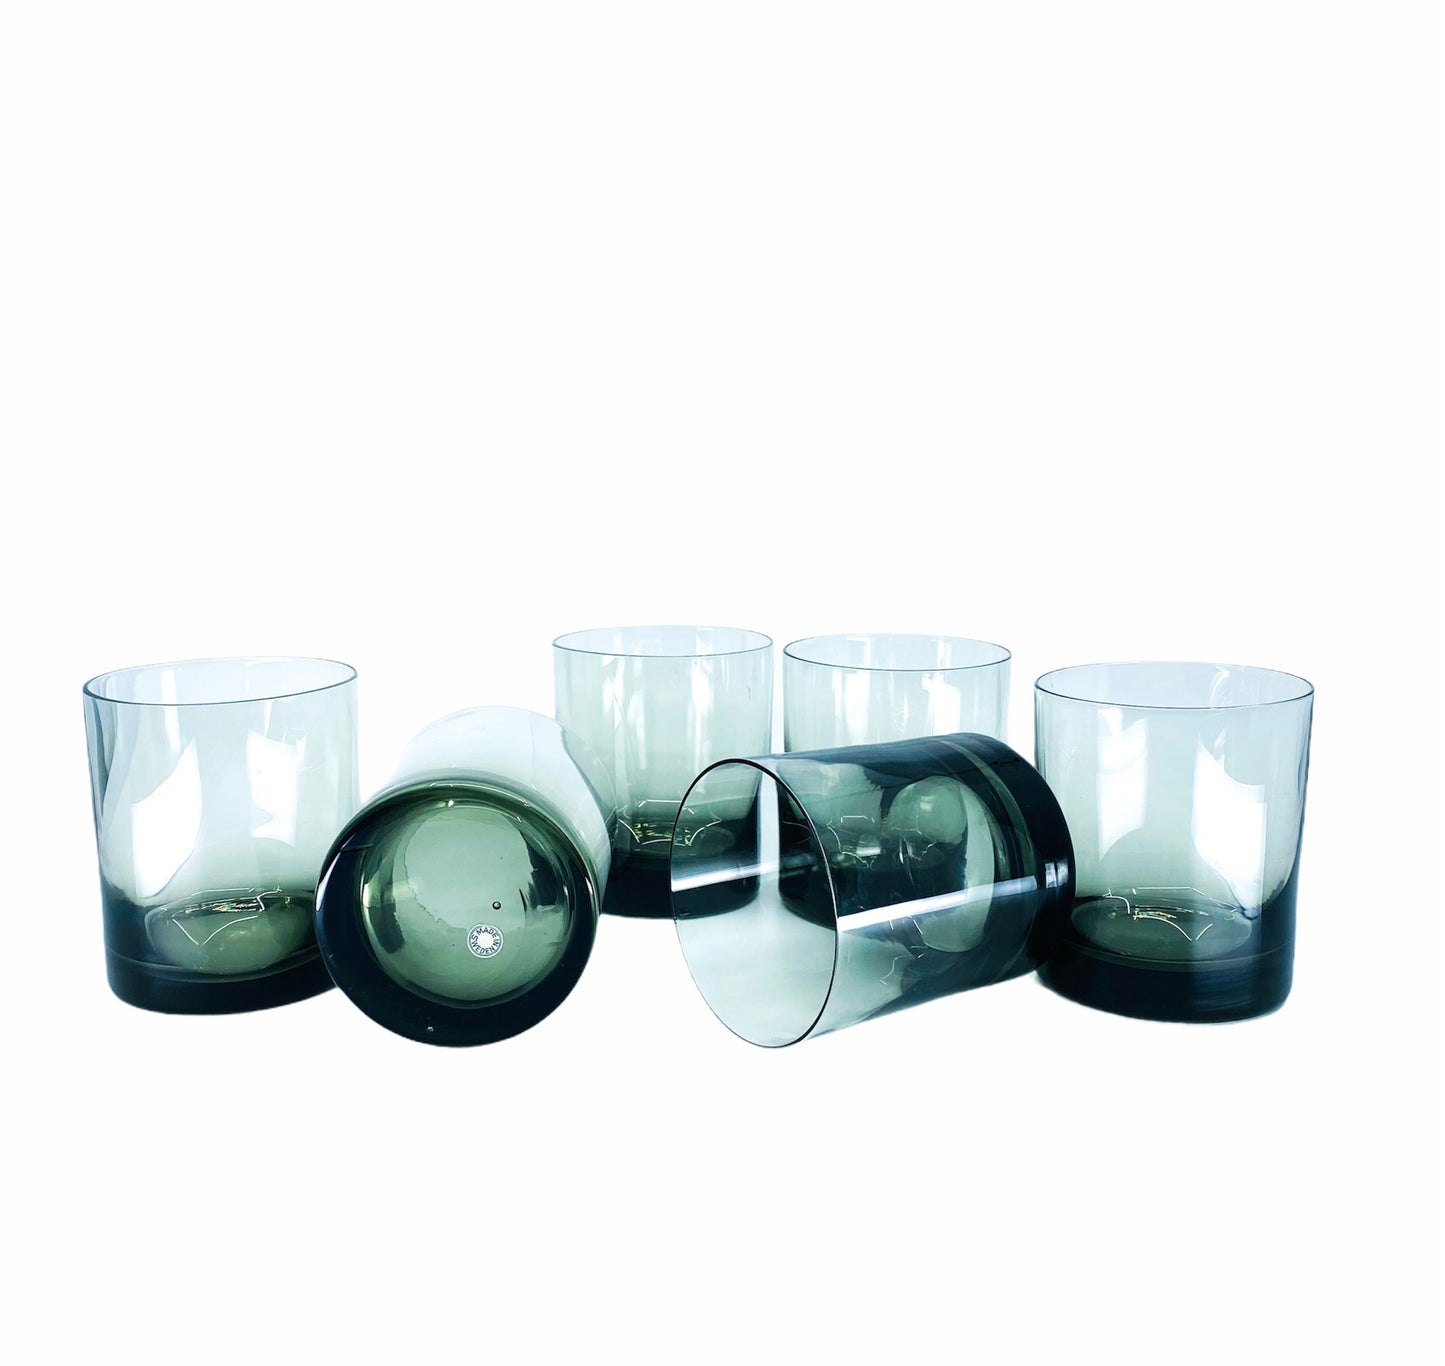 Vintage Smoked Glass Rocks Glasses, Set of 6 - Made in Sweden